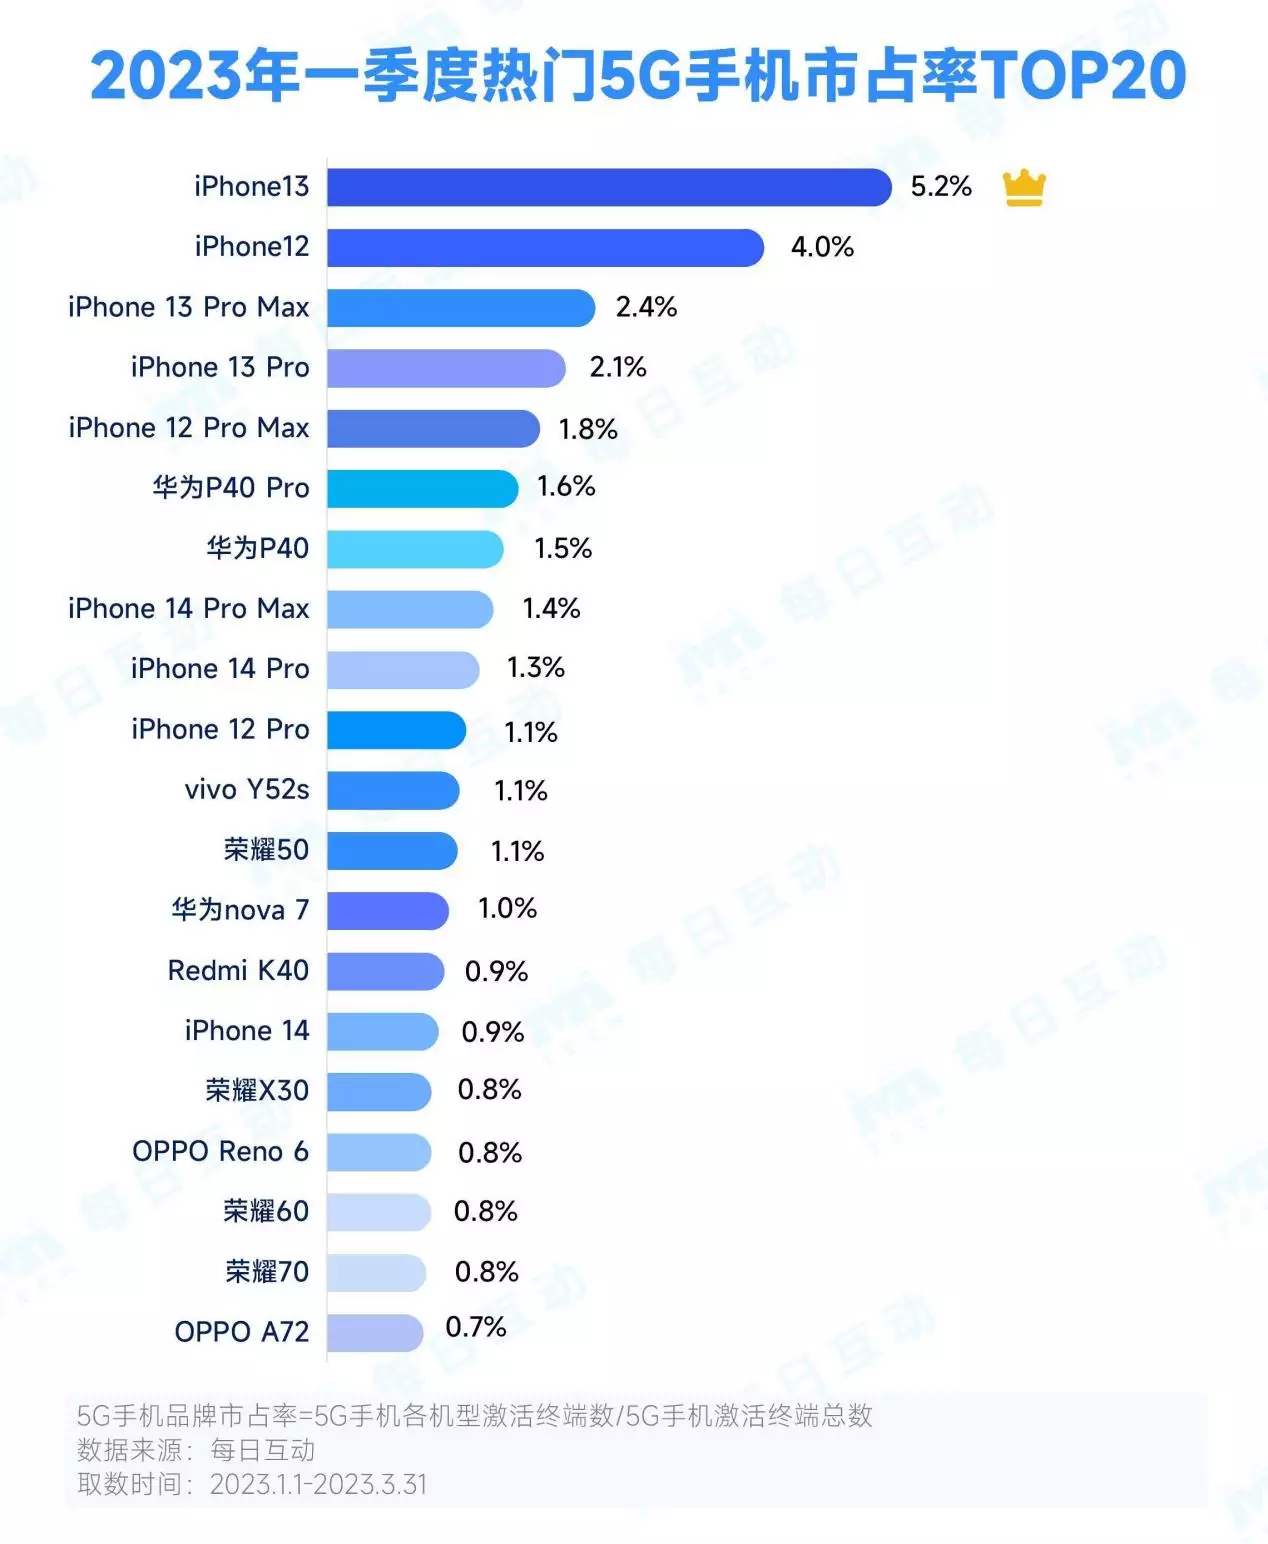 Huawei 5G smartphone 2023